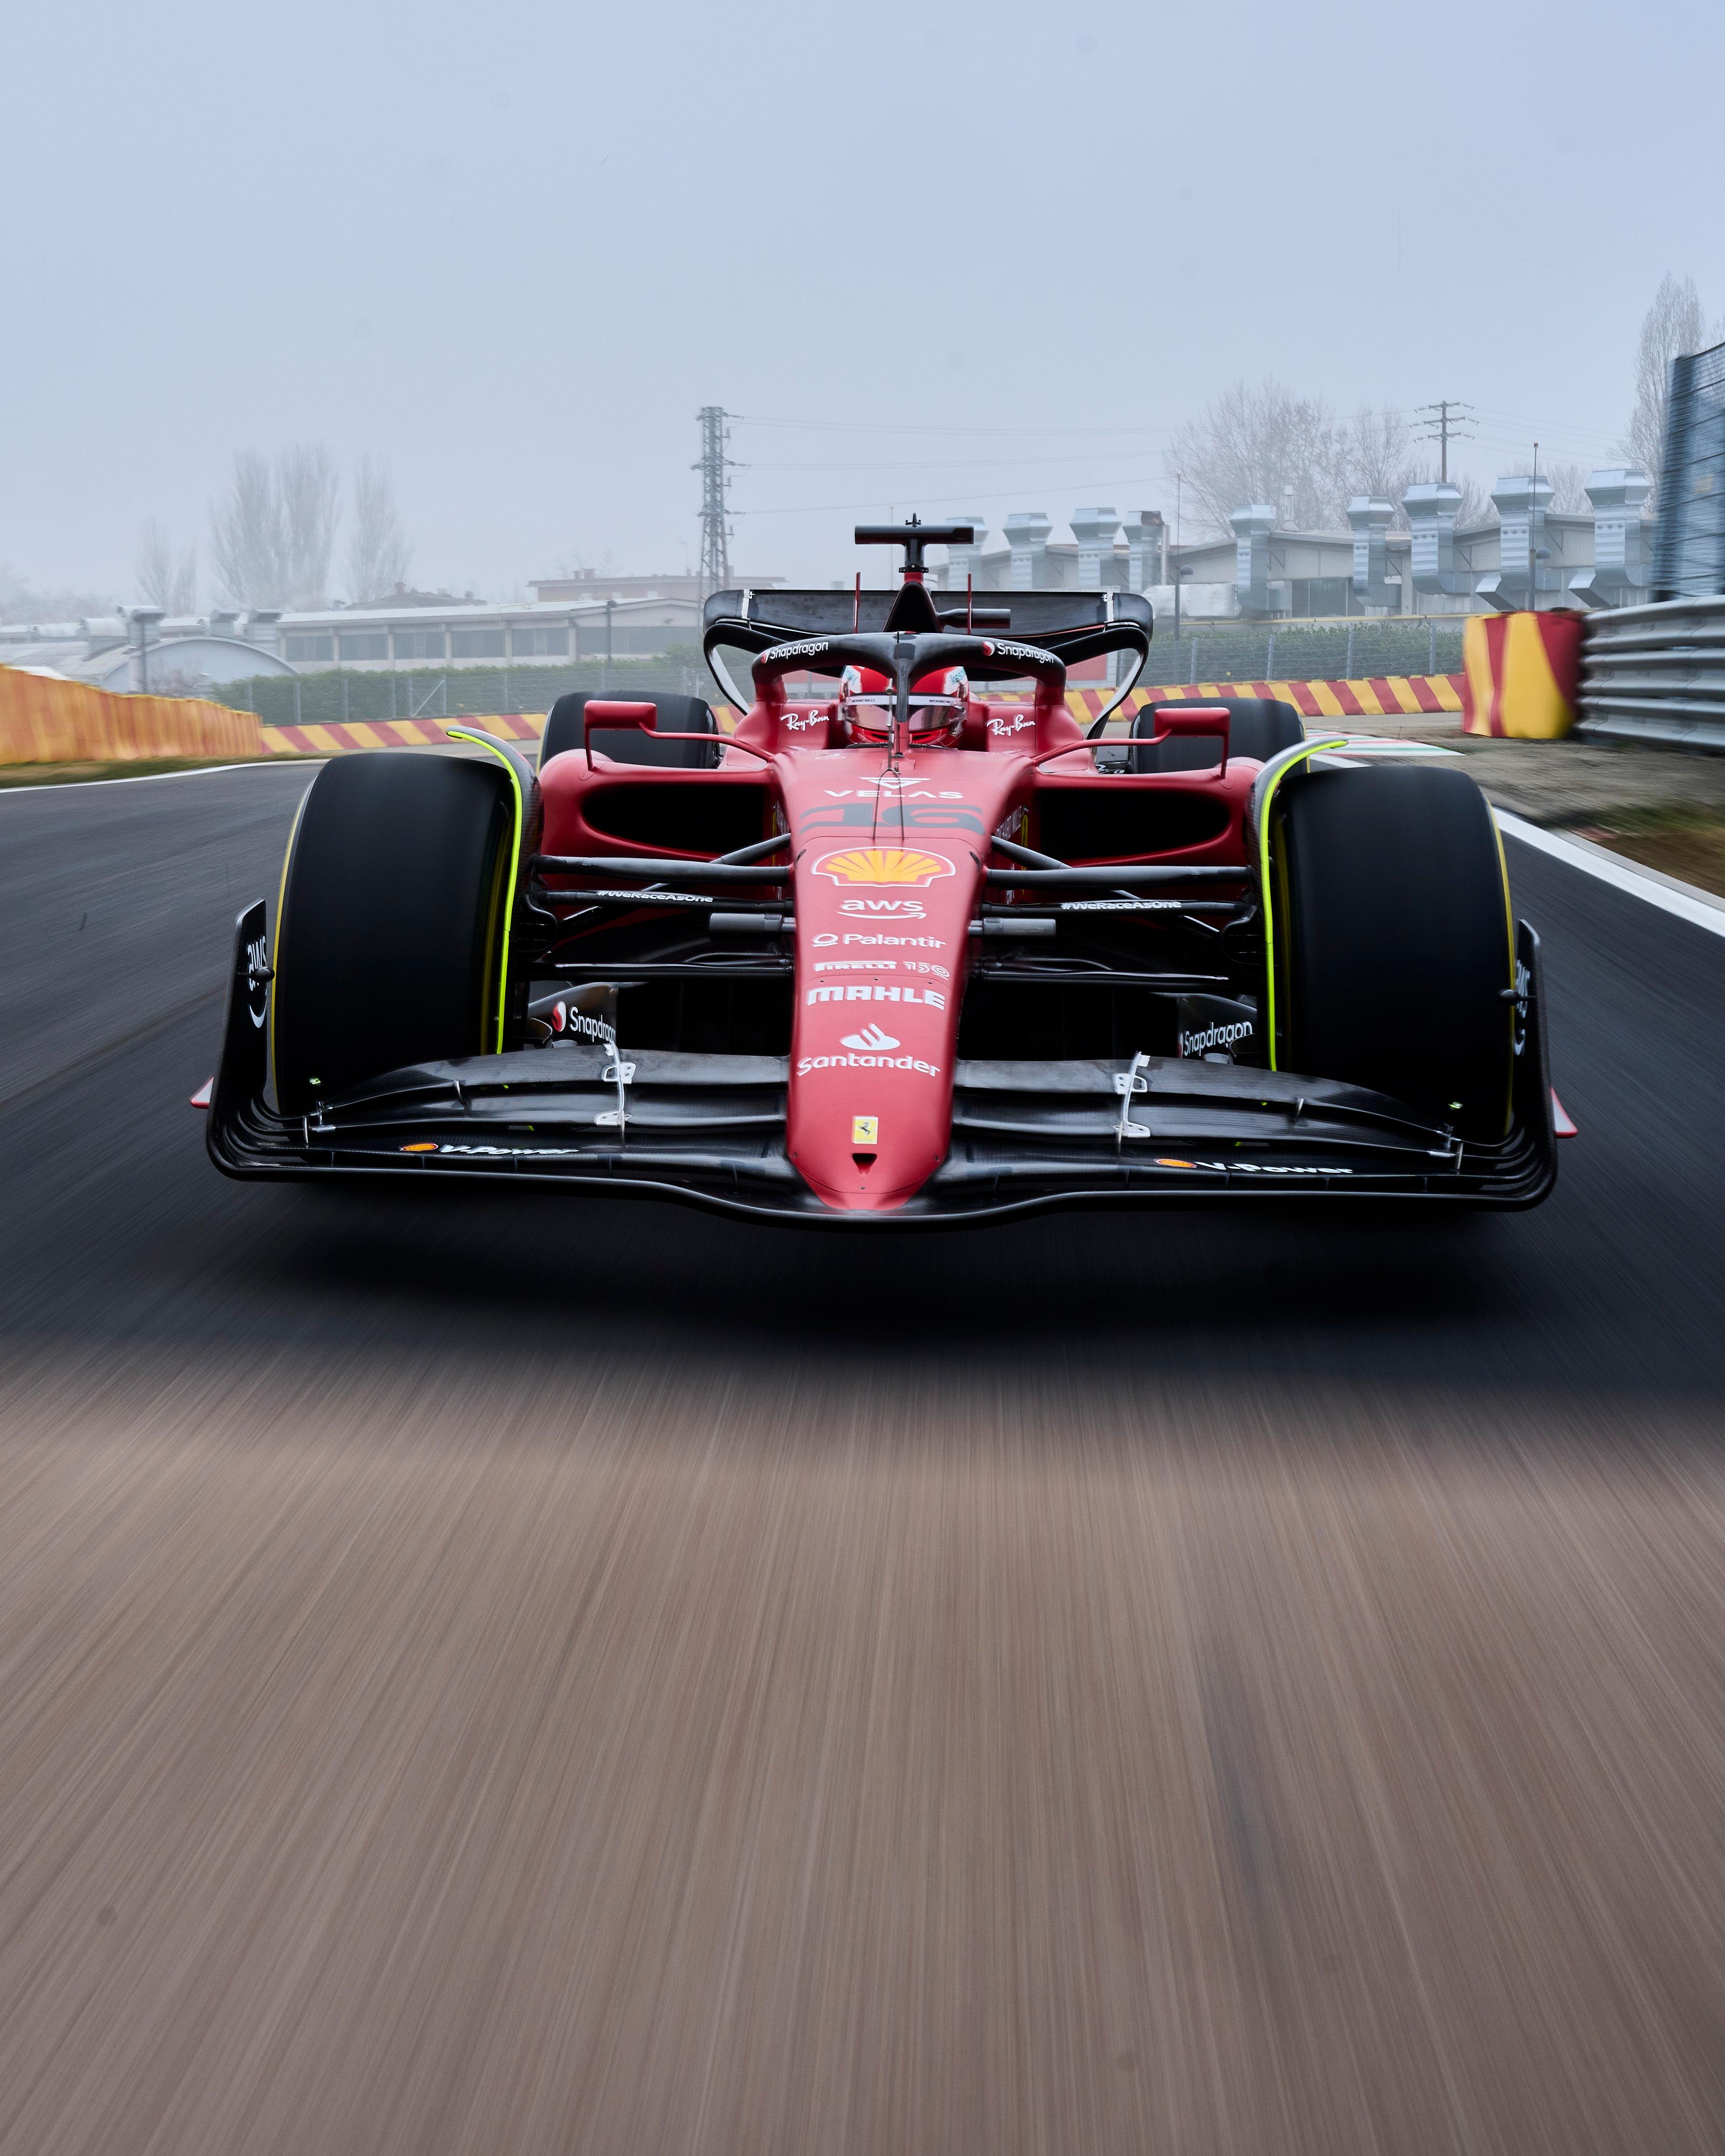 Scuderia Ferrari On Next Stop For F1 Circuitcat